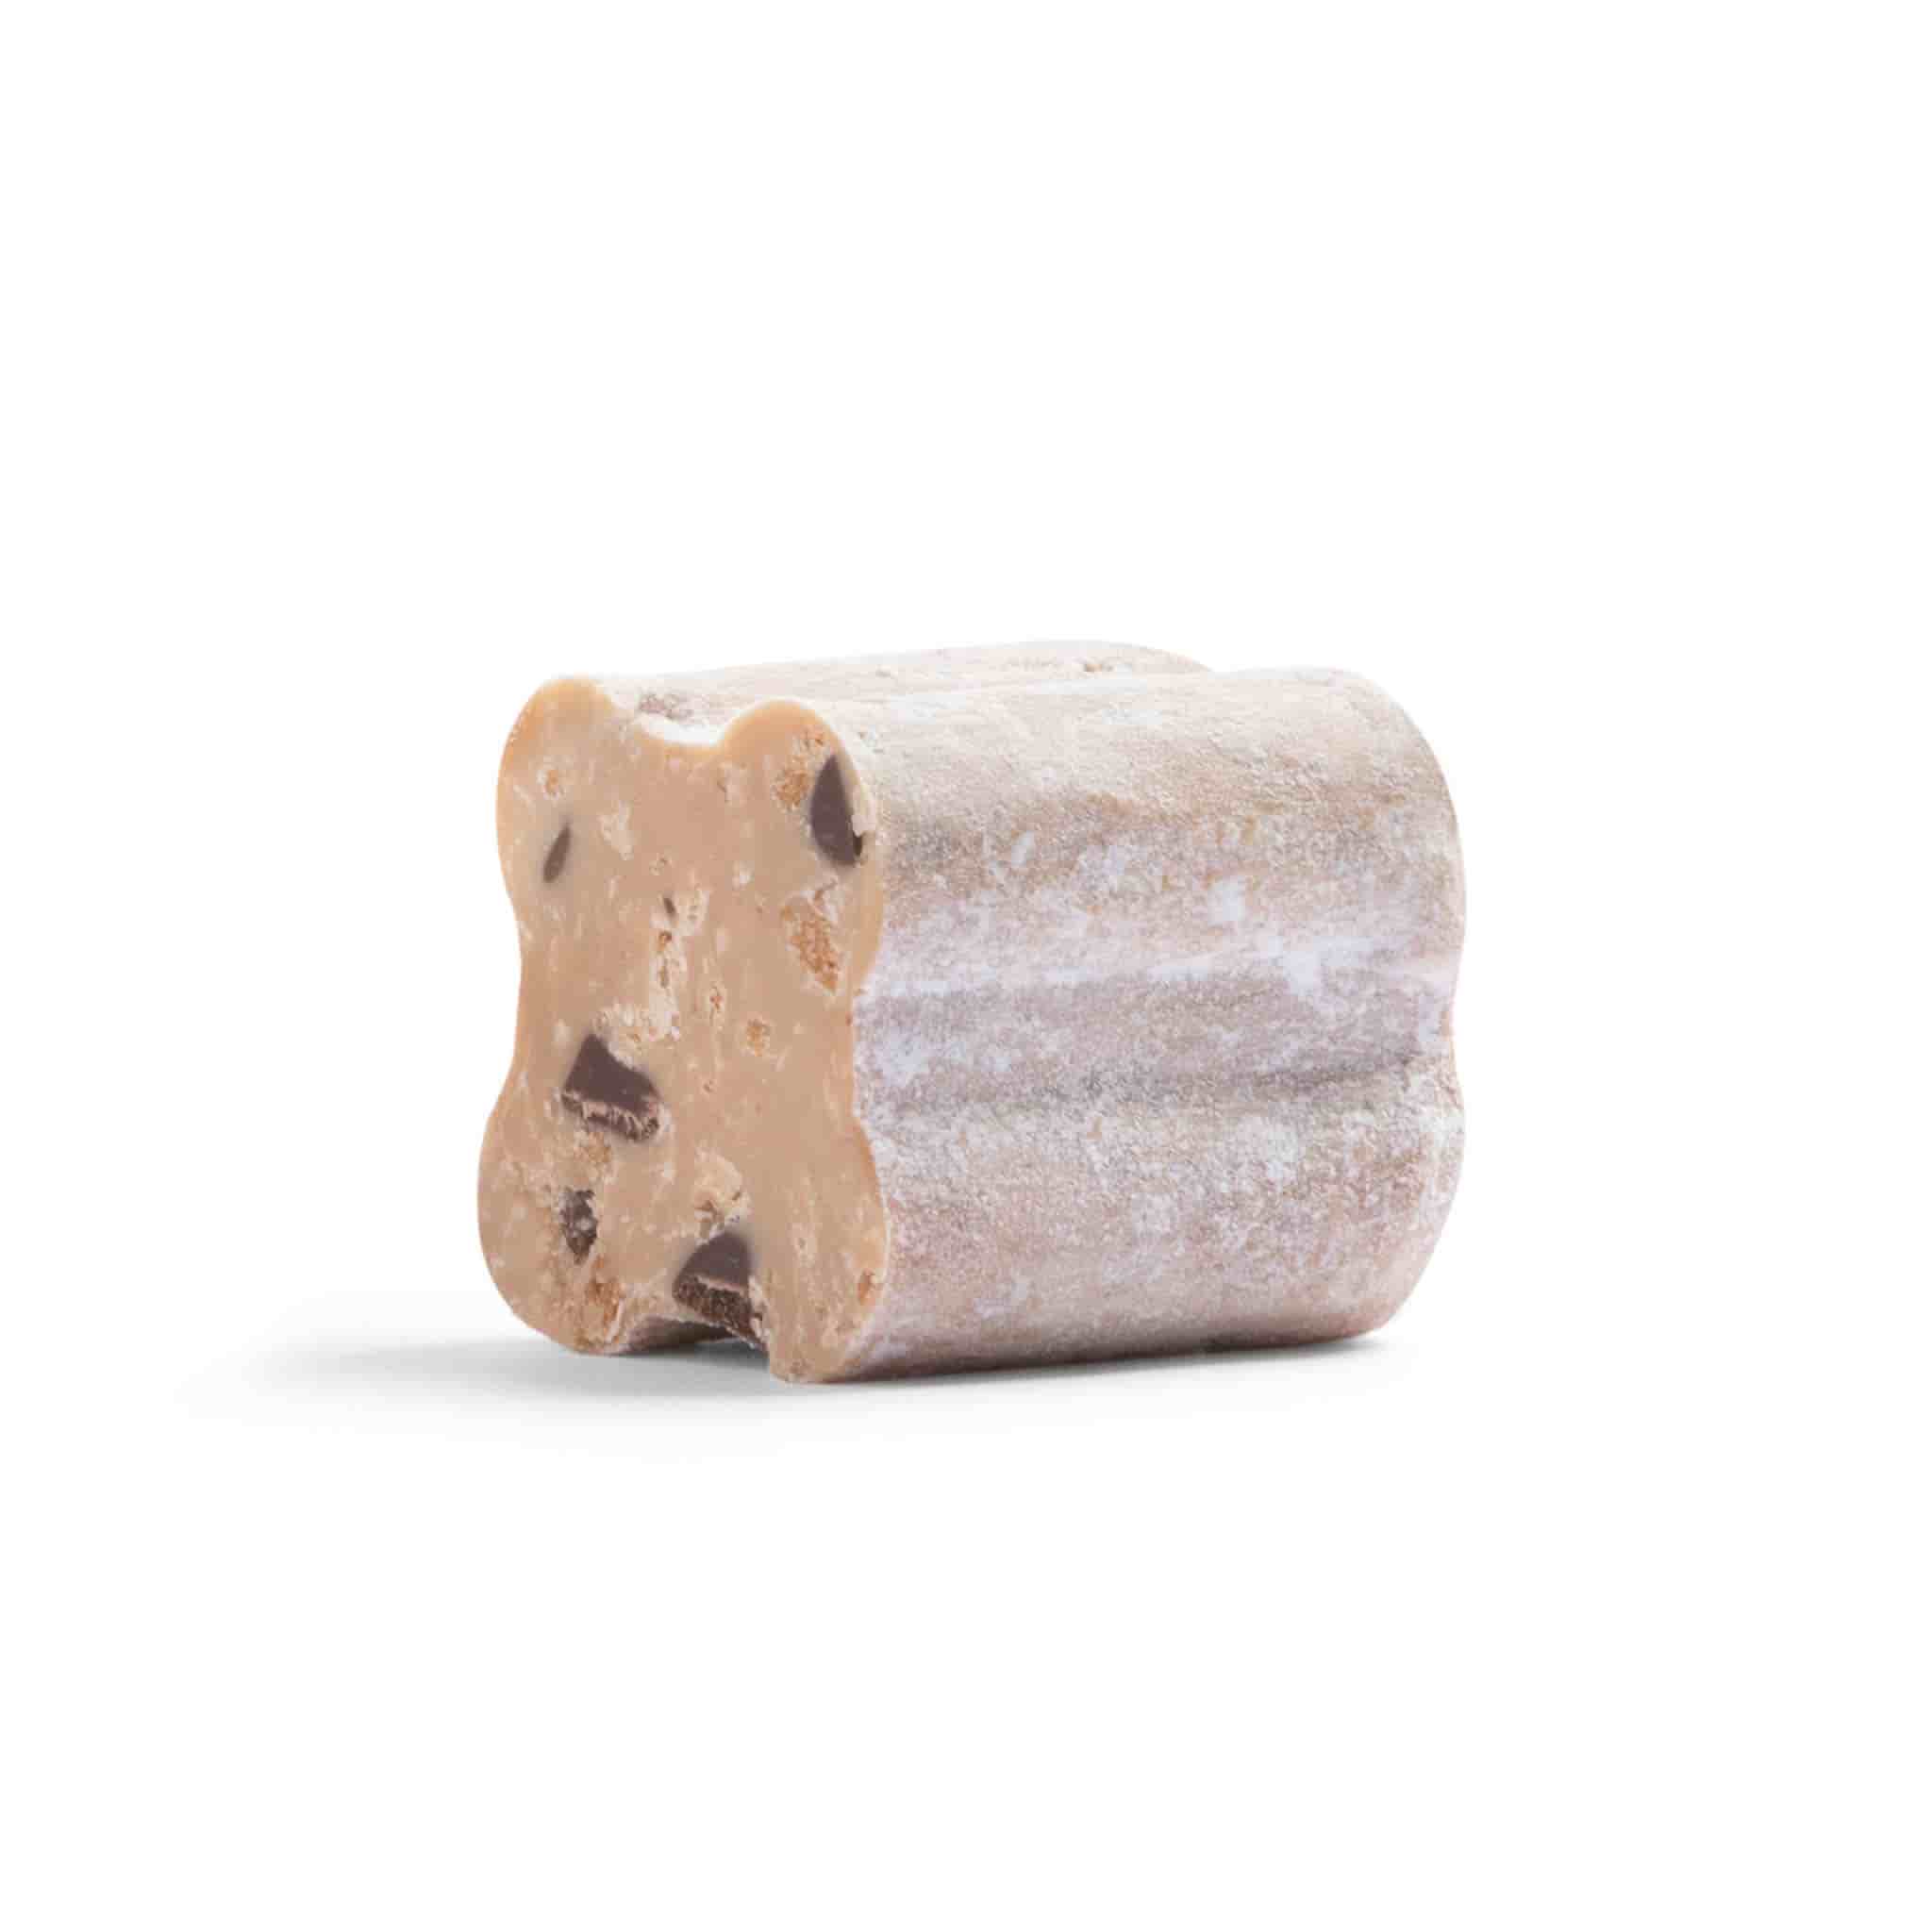 La Perla di Torino Salted Caramel Cookie & Salted Peanut Truffle Collection, 145g